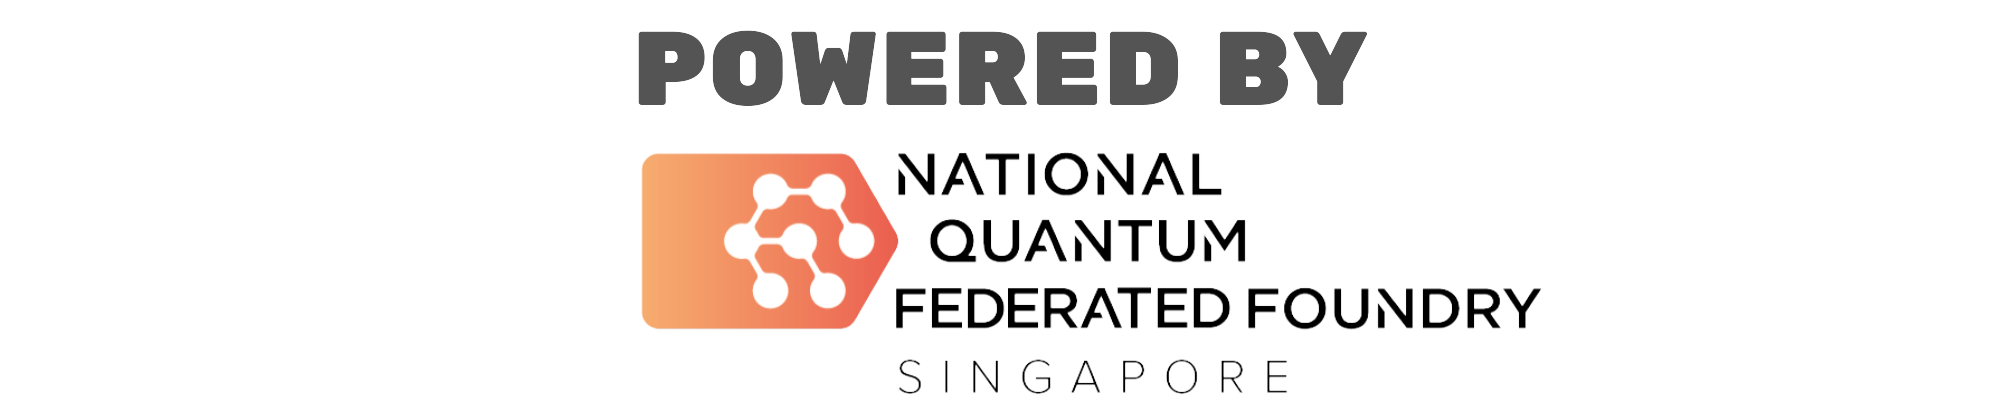 NQFF Event Banner